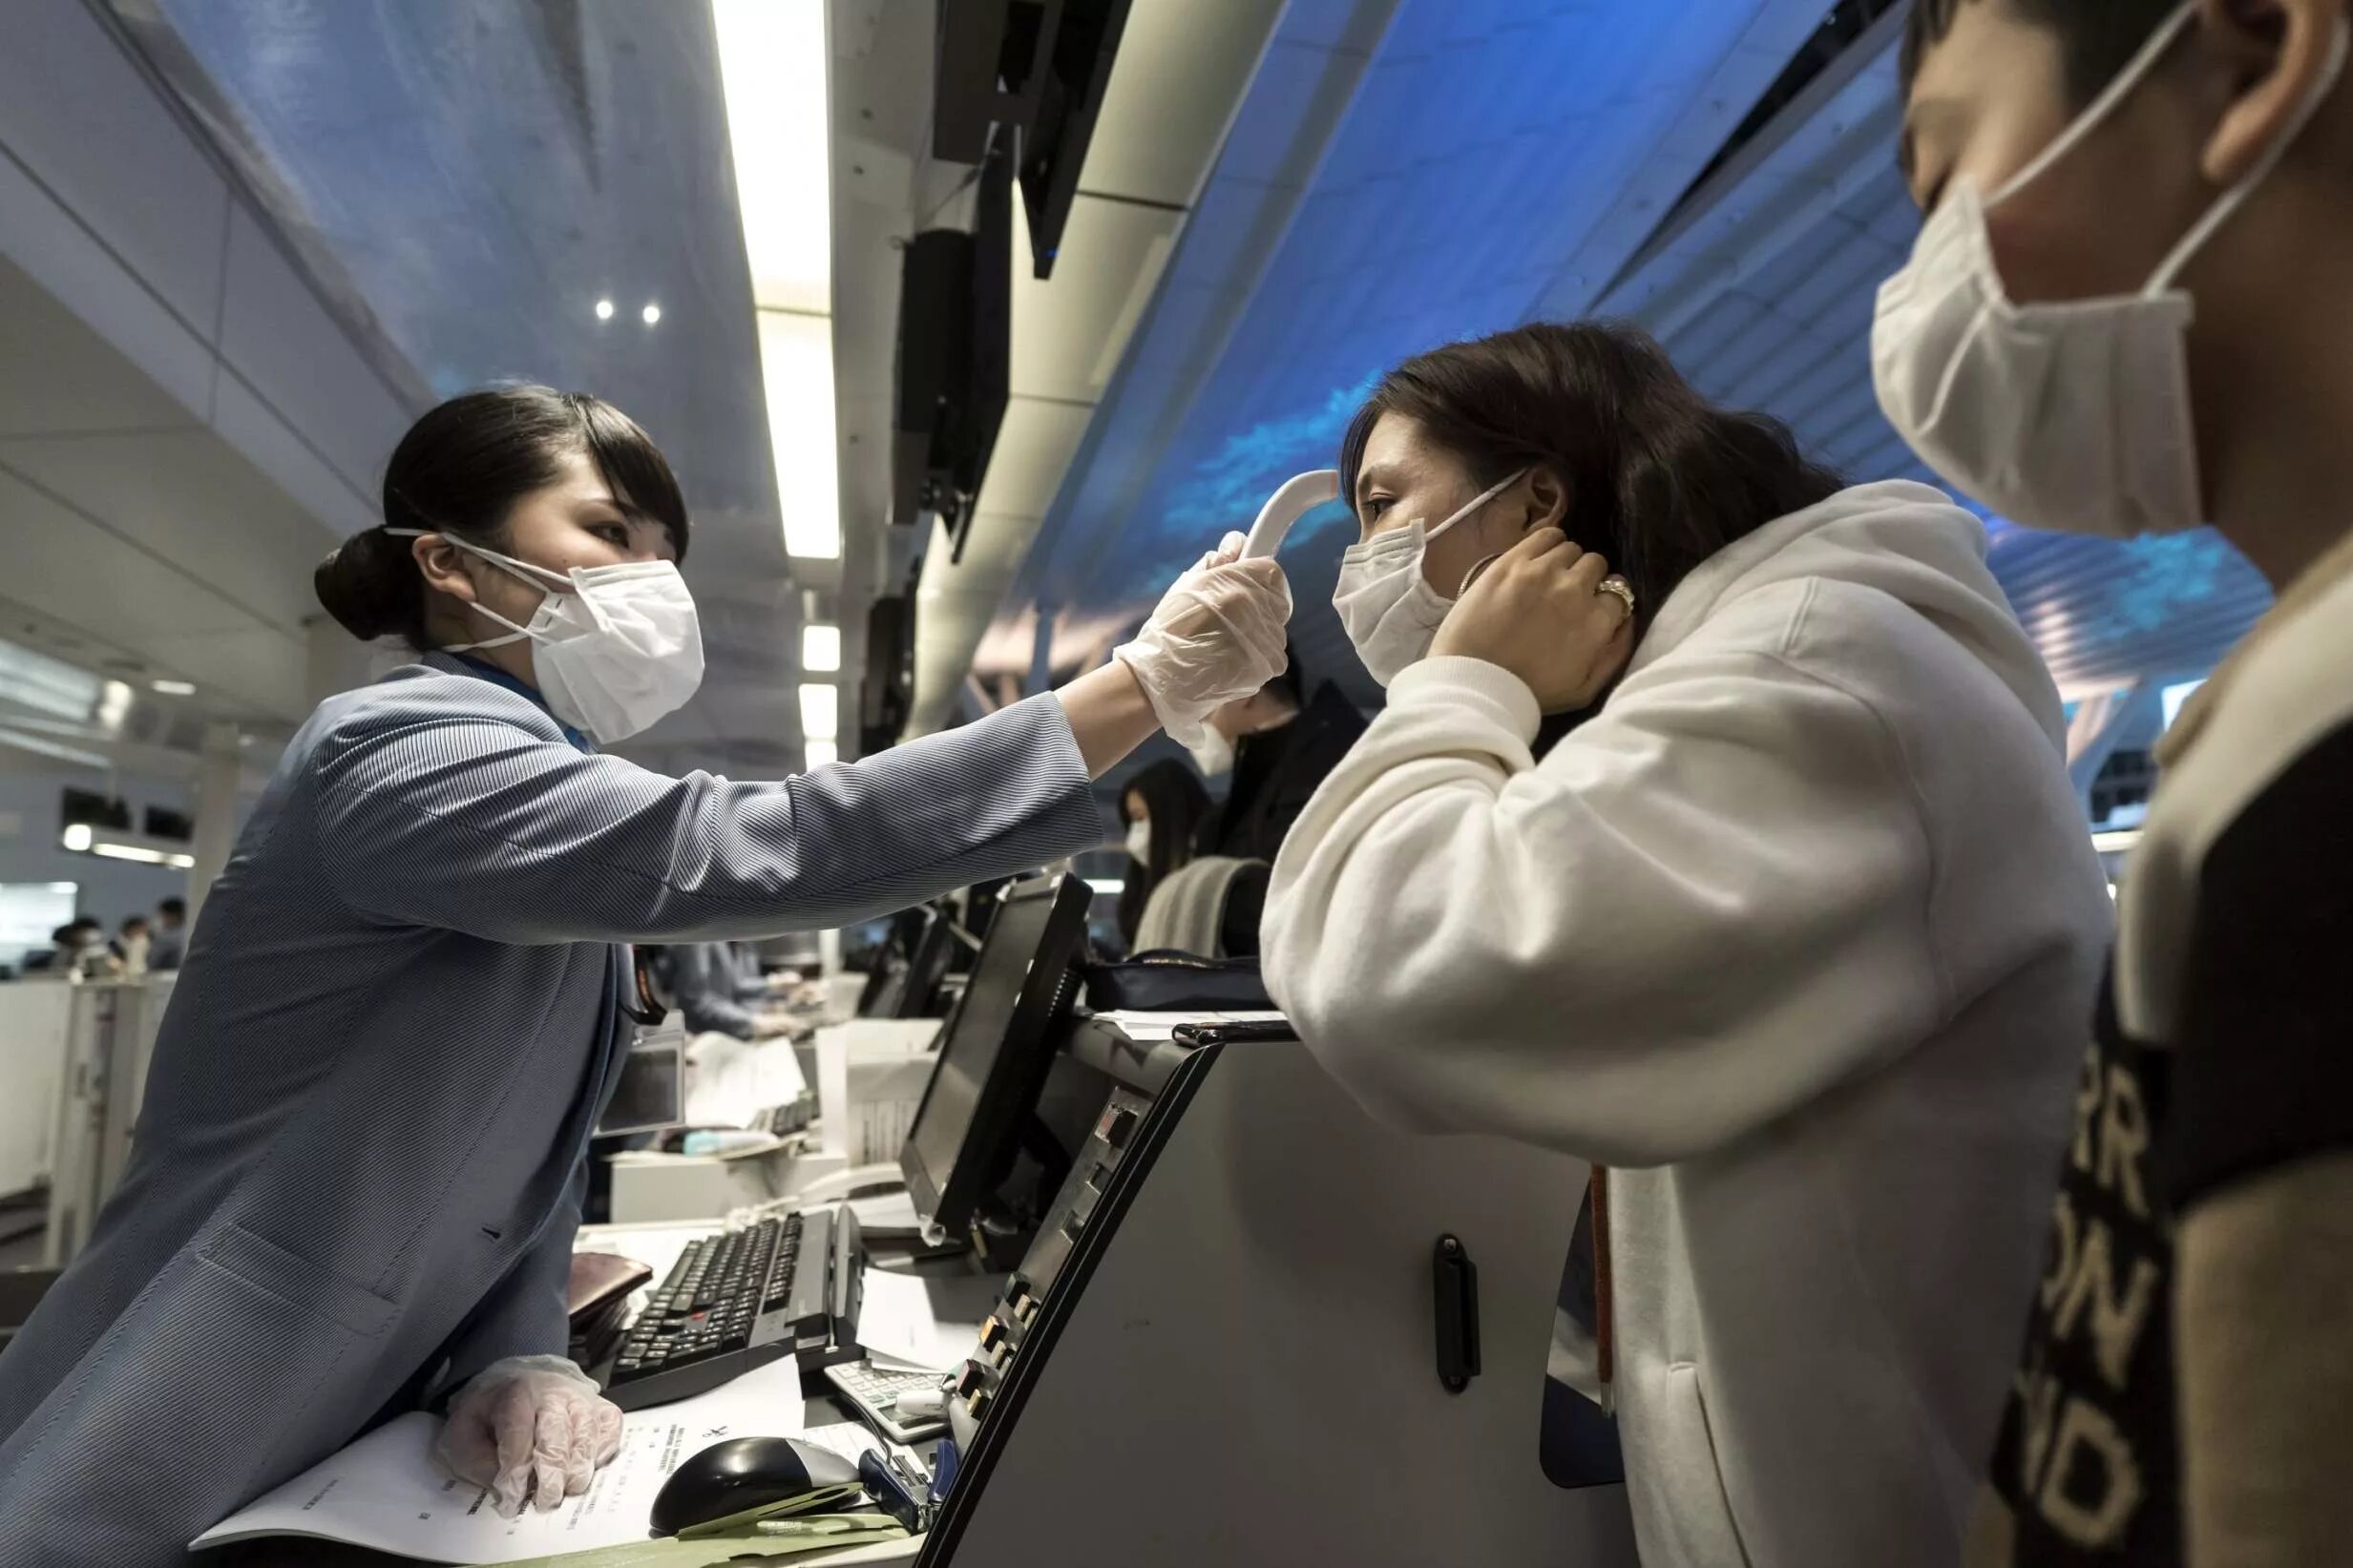 Токио коронавирус. Япония аэропорт люди. Бизнес и коронавирус картинки. Новости события коронавирус